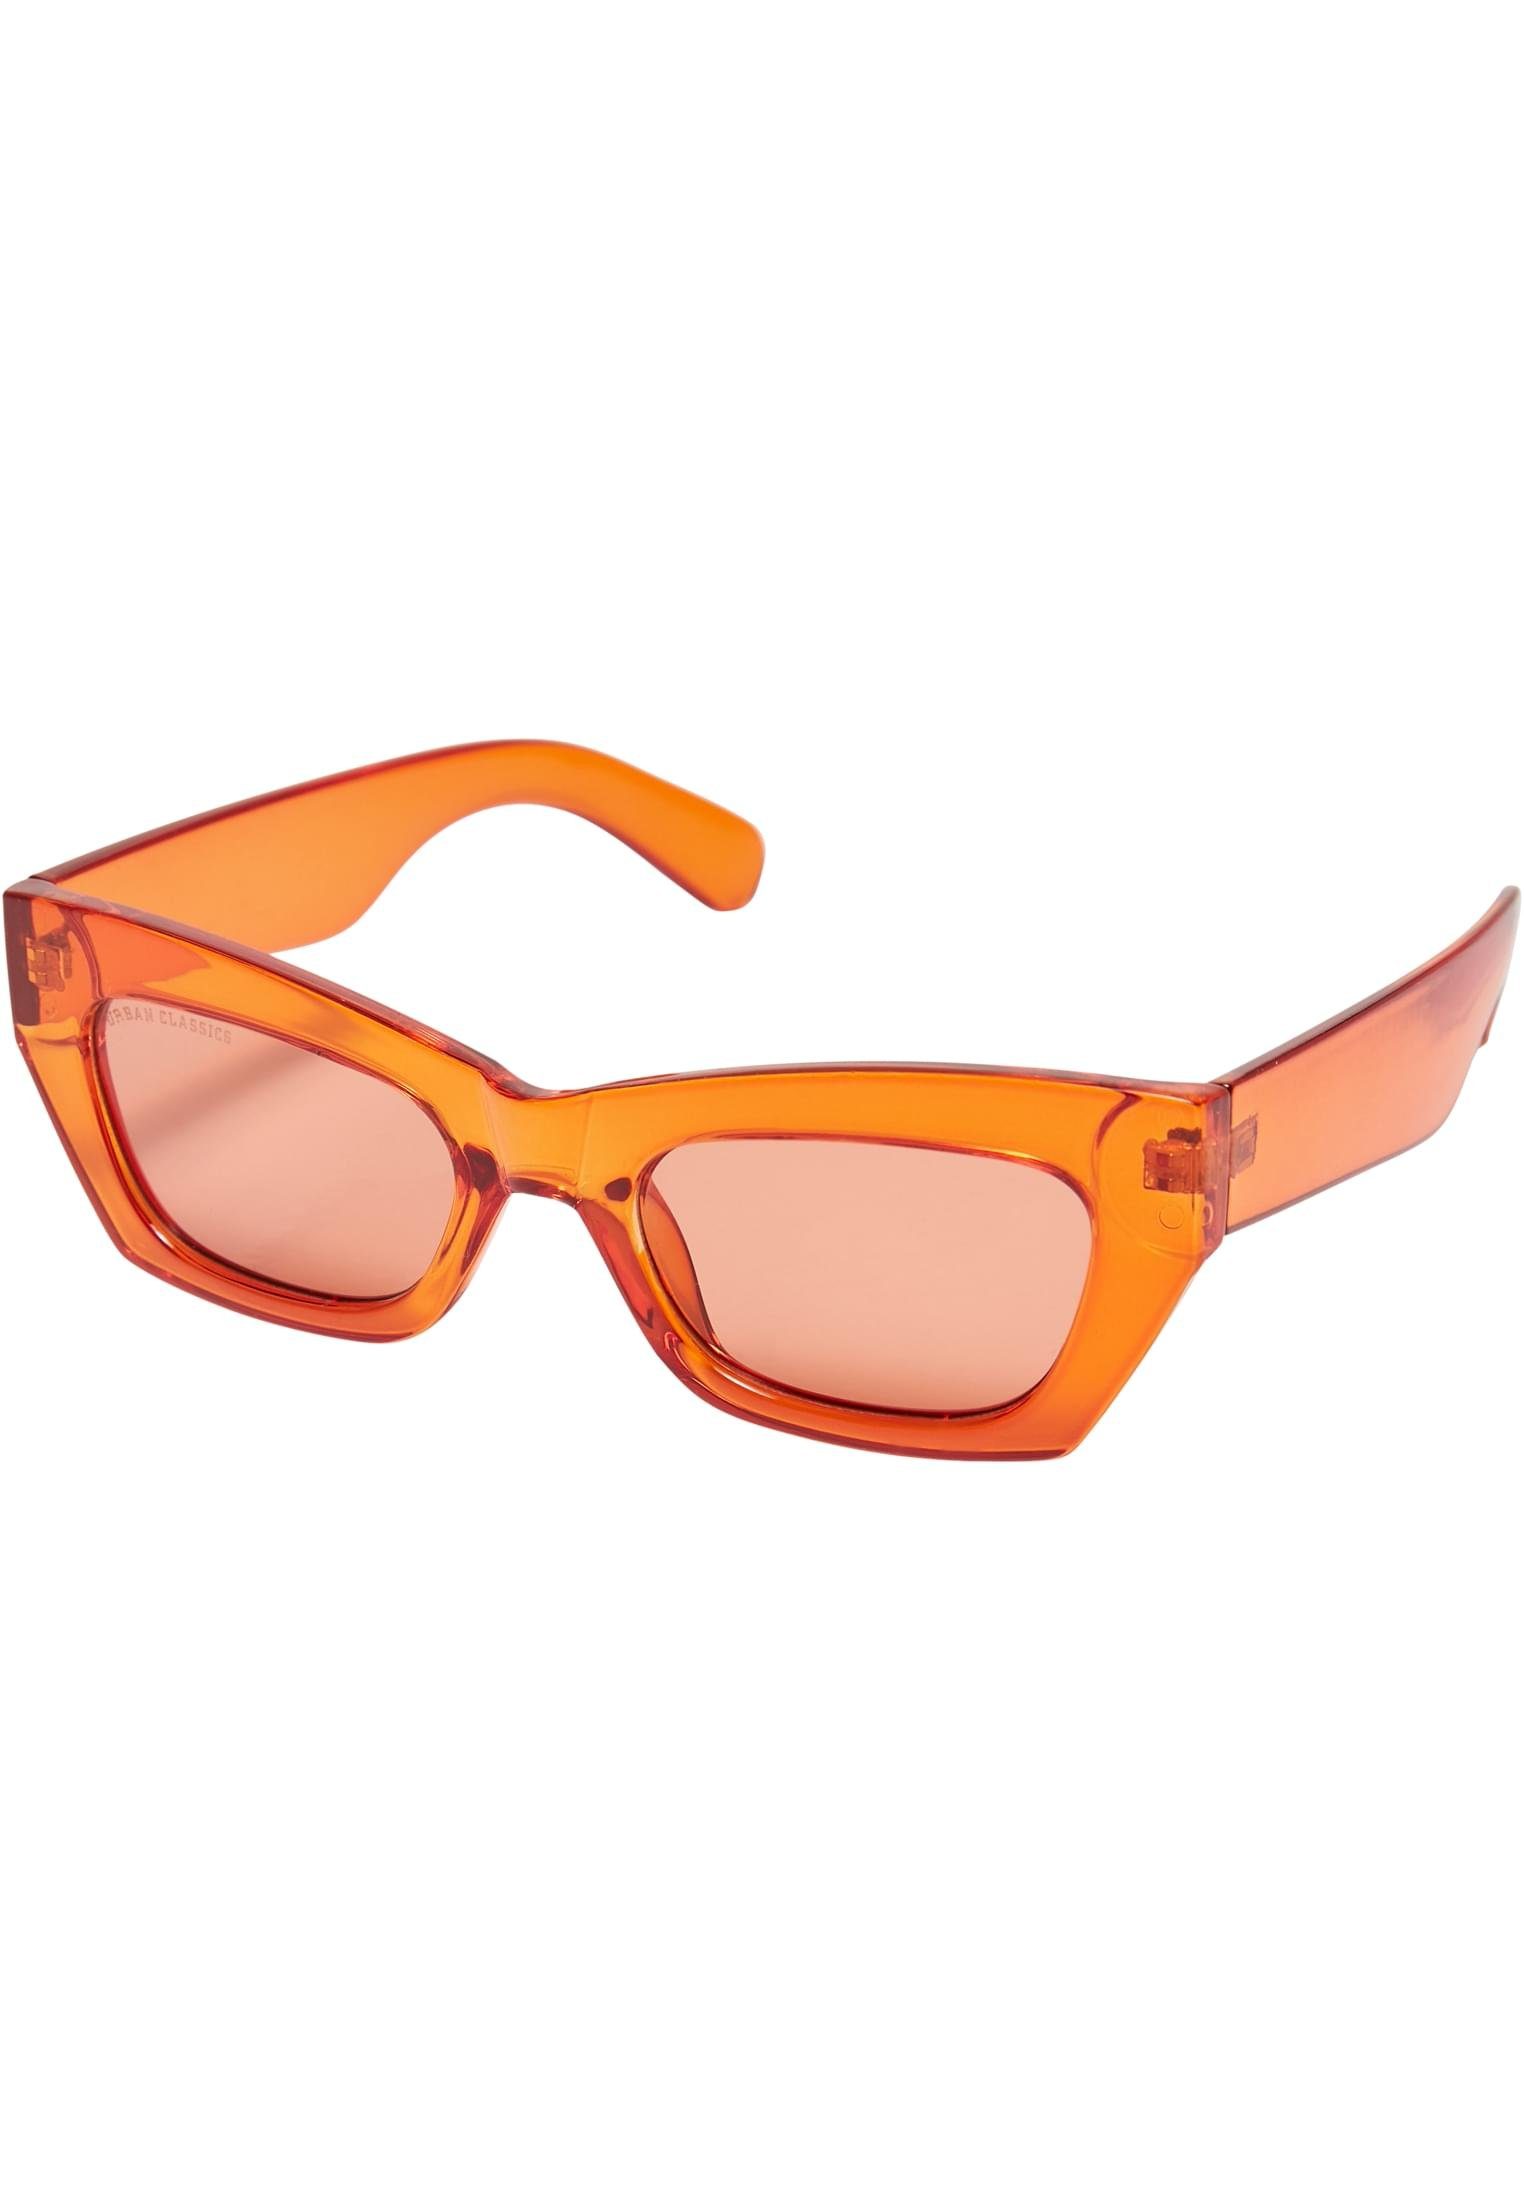 URBAN Unisex Sonnenbrille Venice CLASSICS Sunglasses transparentvintageorange